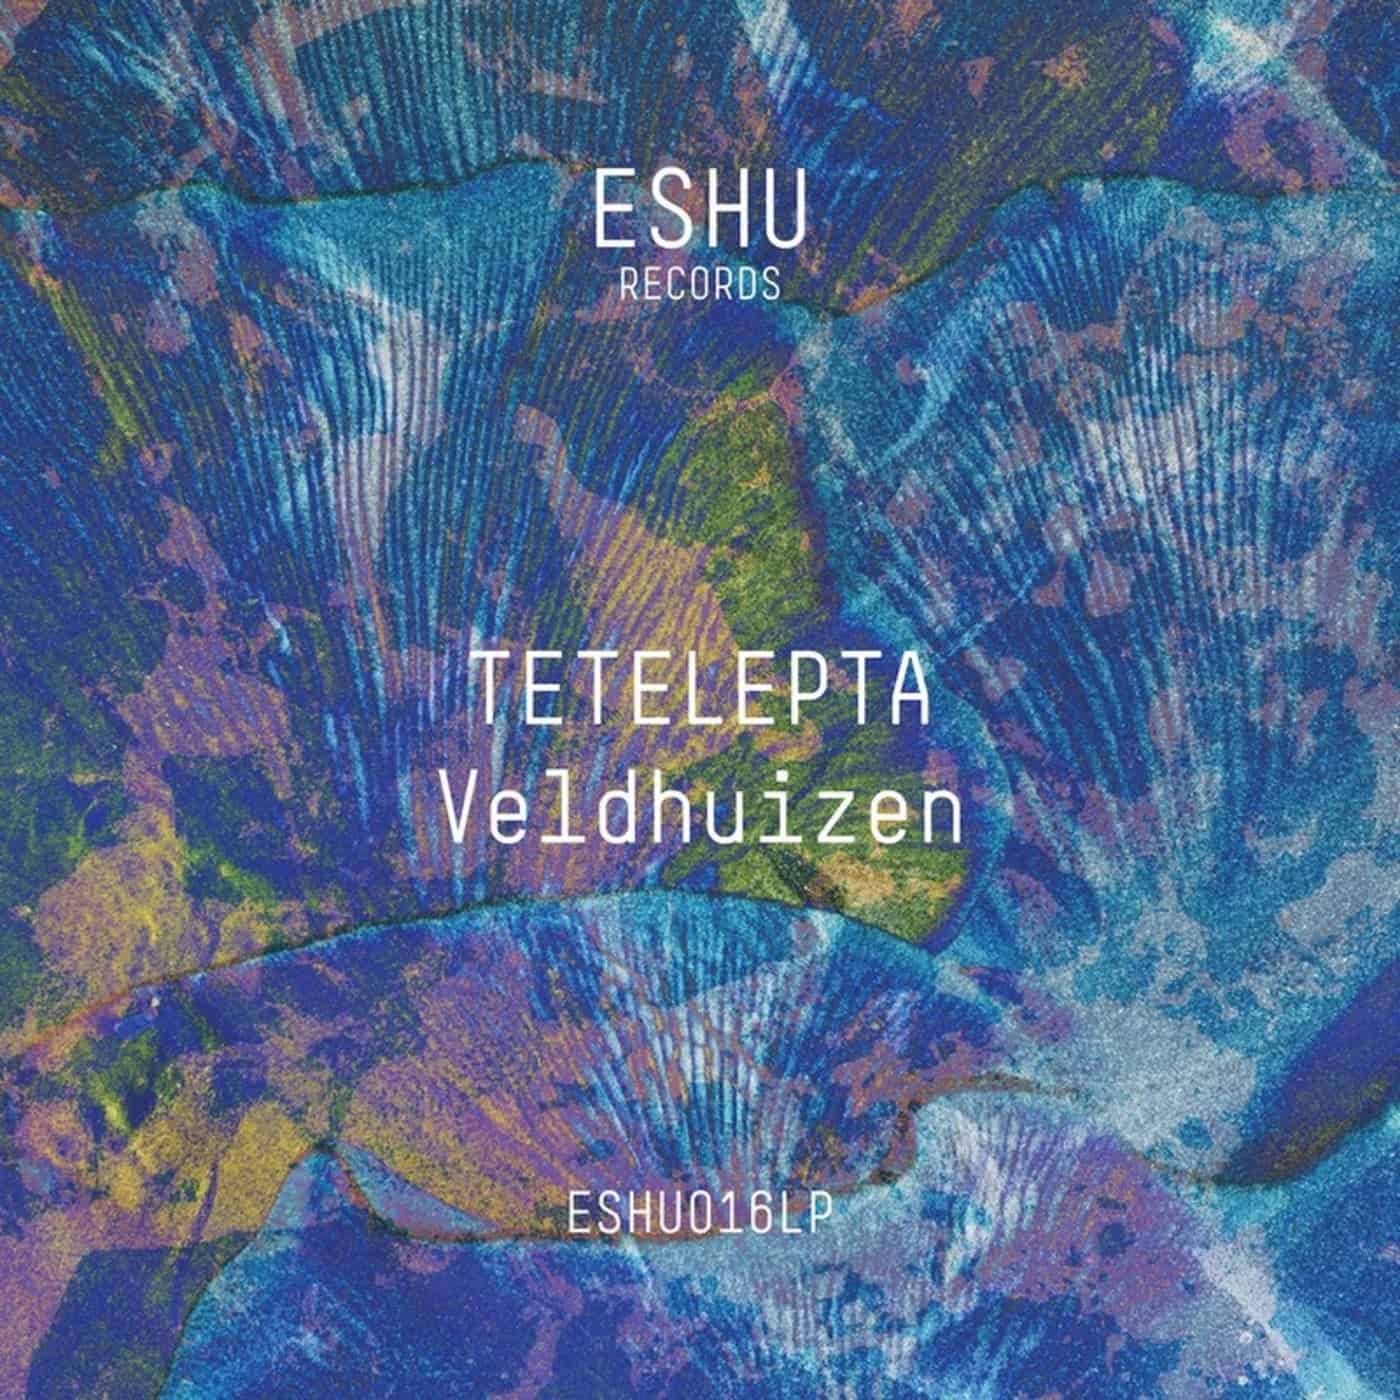 Download Tetelepta - Veldhuizen on Electrobuzz